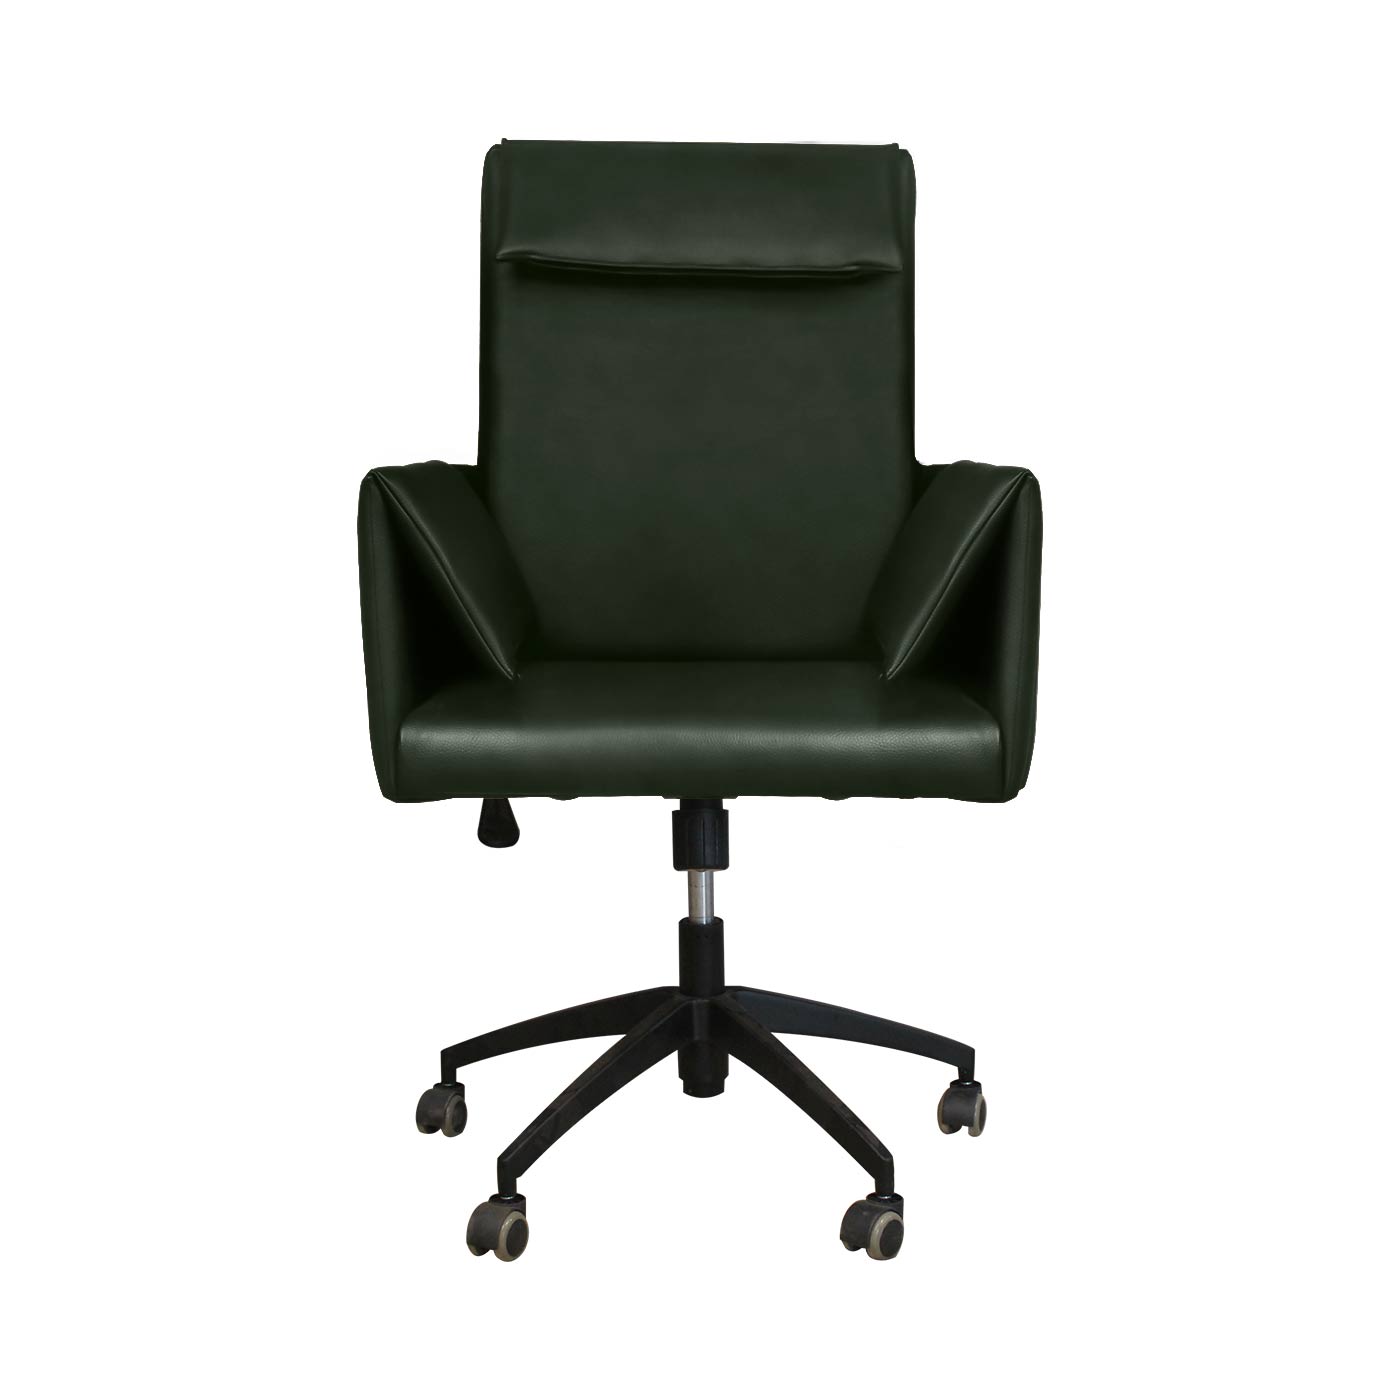 Preston Textured Green Executive Chair